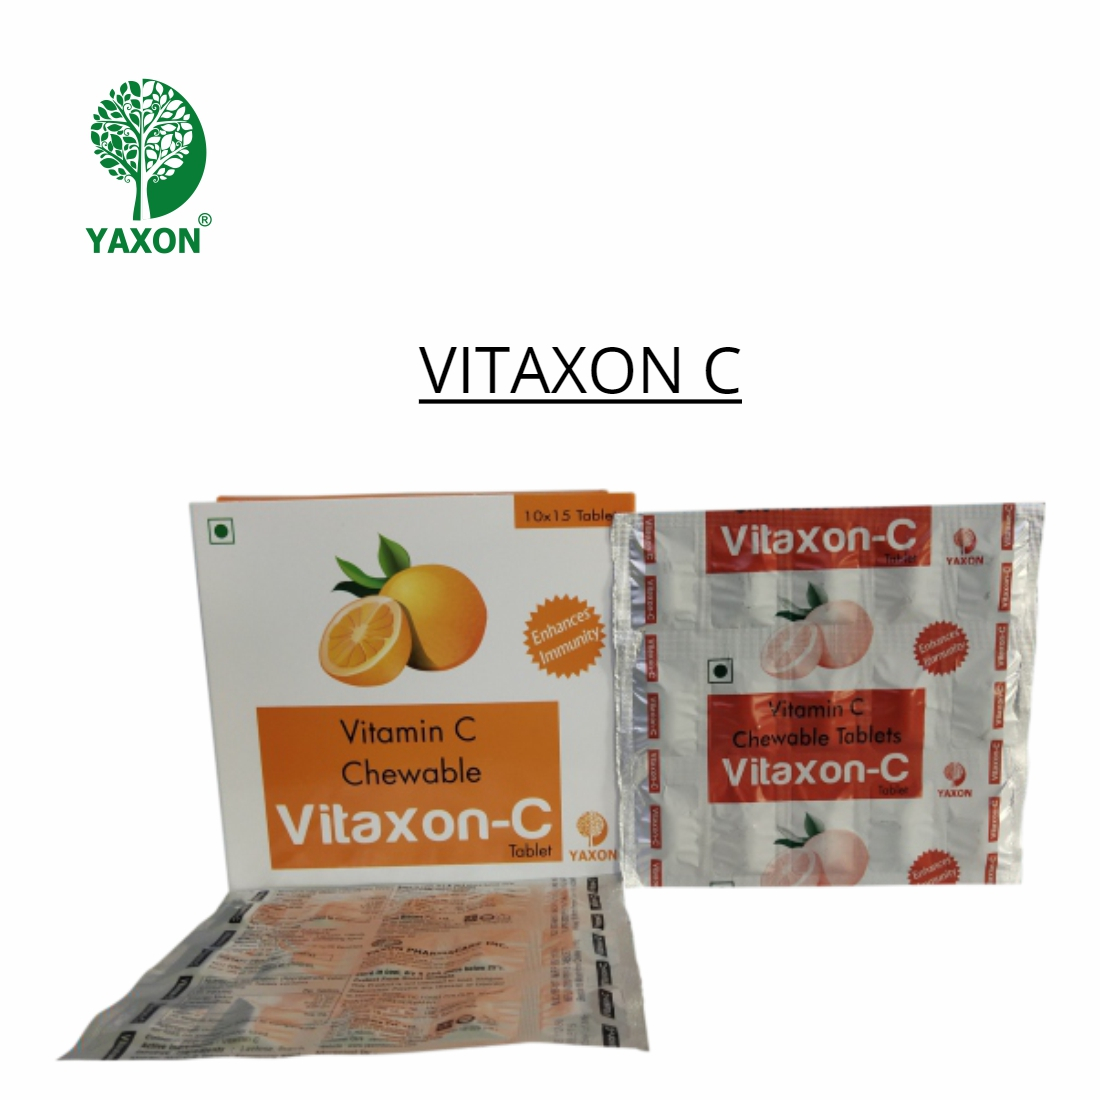 YAXON VITAXON C Chewable Tablets Stripe Pack